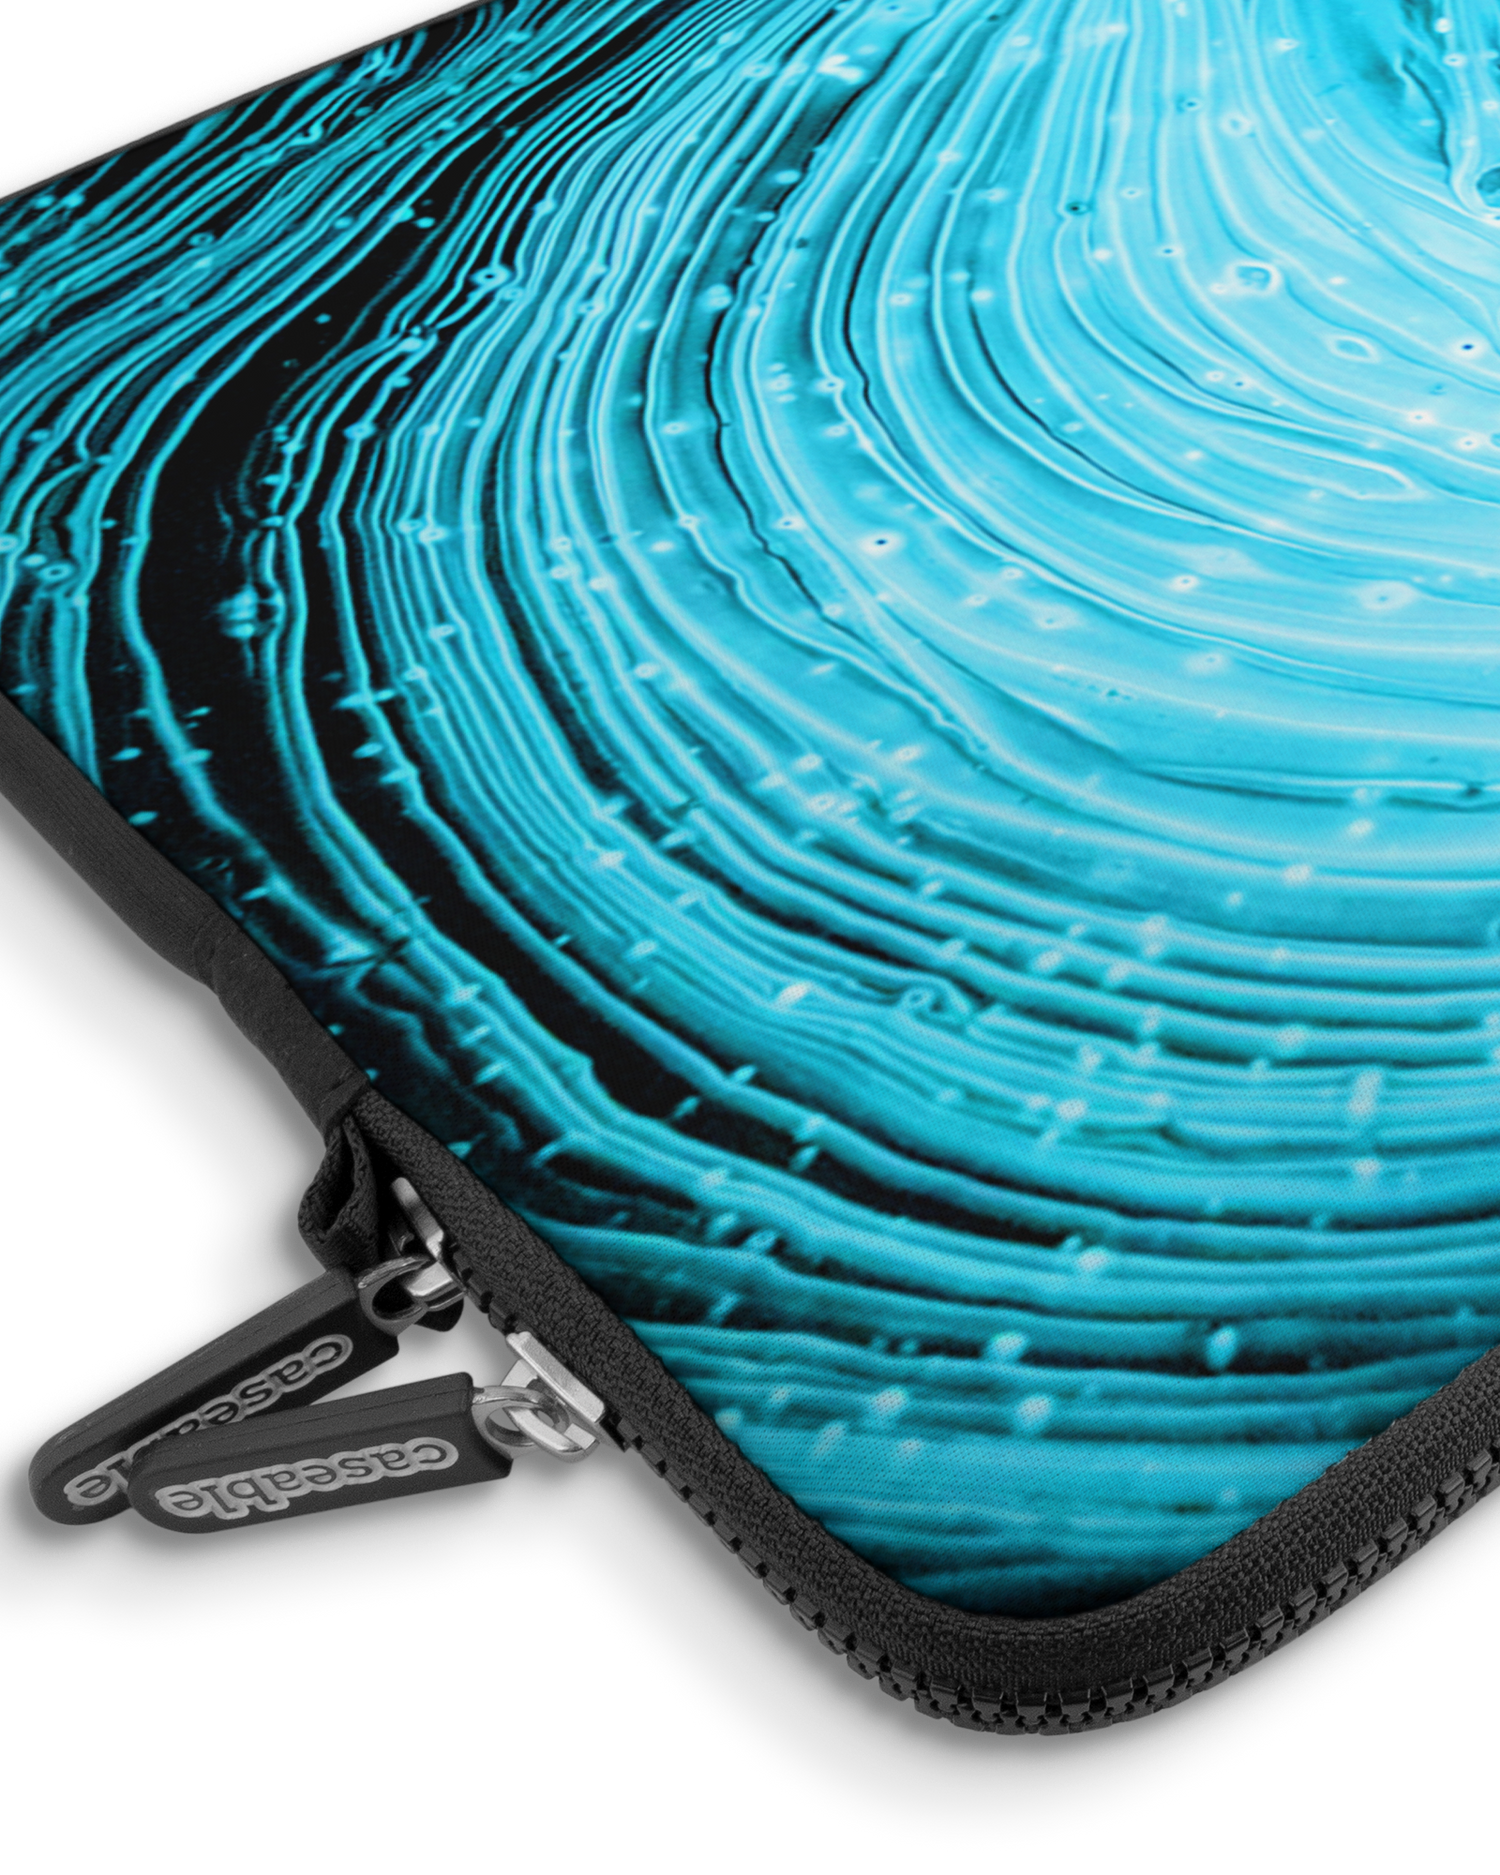 Turquoise Ripples Premium Laptoptasche 15 Zoll mit Gerät im Inneren